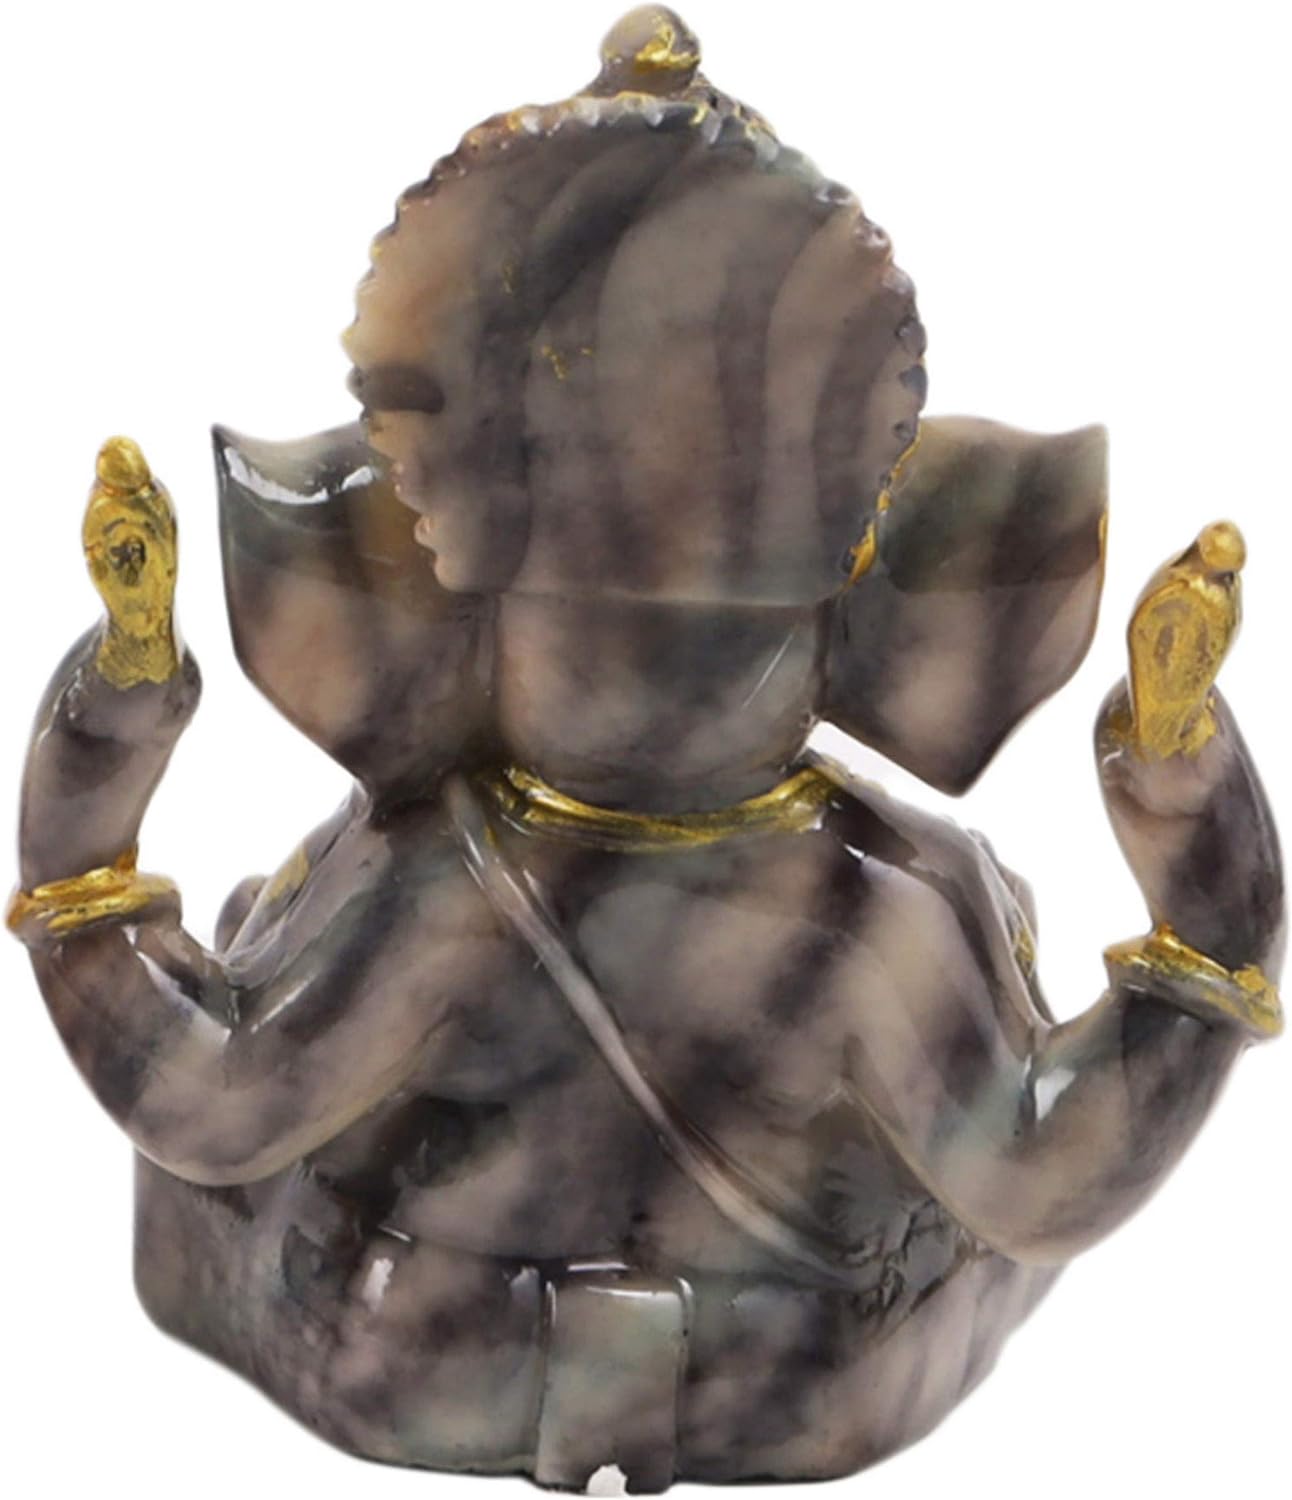 TIED RIBBONS Ganesha Statue for Car Dashboard | Hindu Elephant God Statue | Lying Ganesha Idol for Pooja, Home Decor | Ganesh Buddha Figurine | Ganesh Chaturthi Decor | Ganesh Chaturthi Gifts